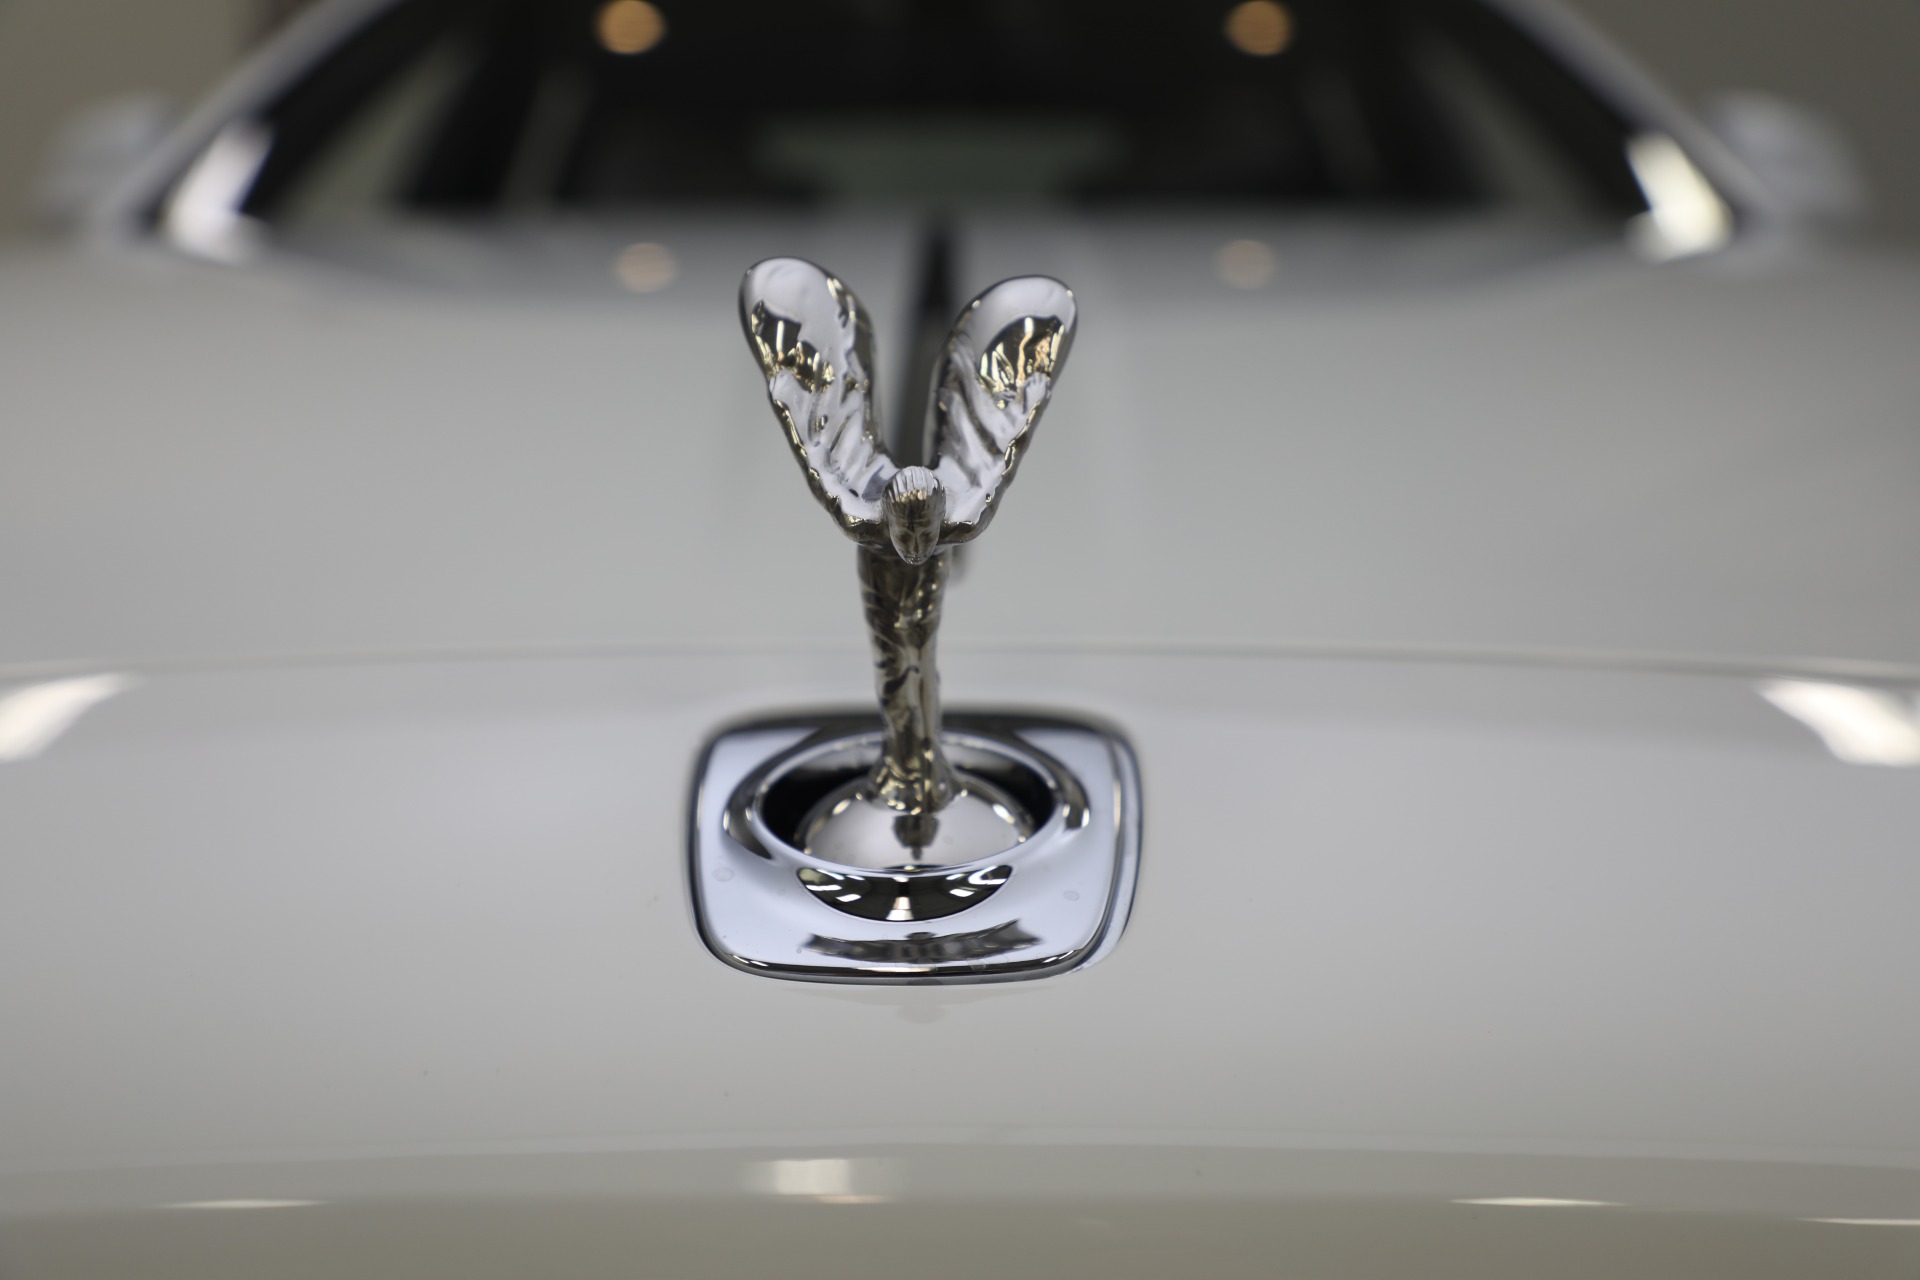 Used 2017 Rolls Royce Ghost